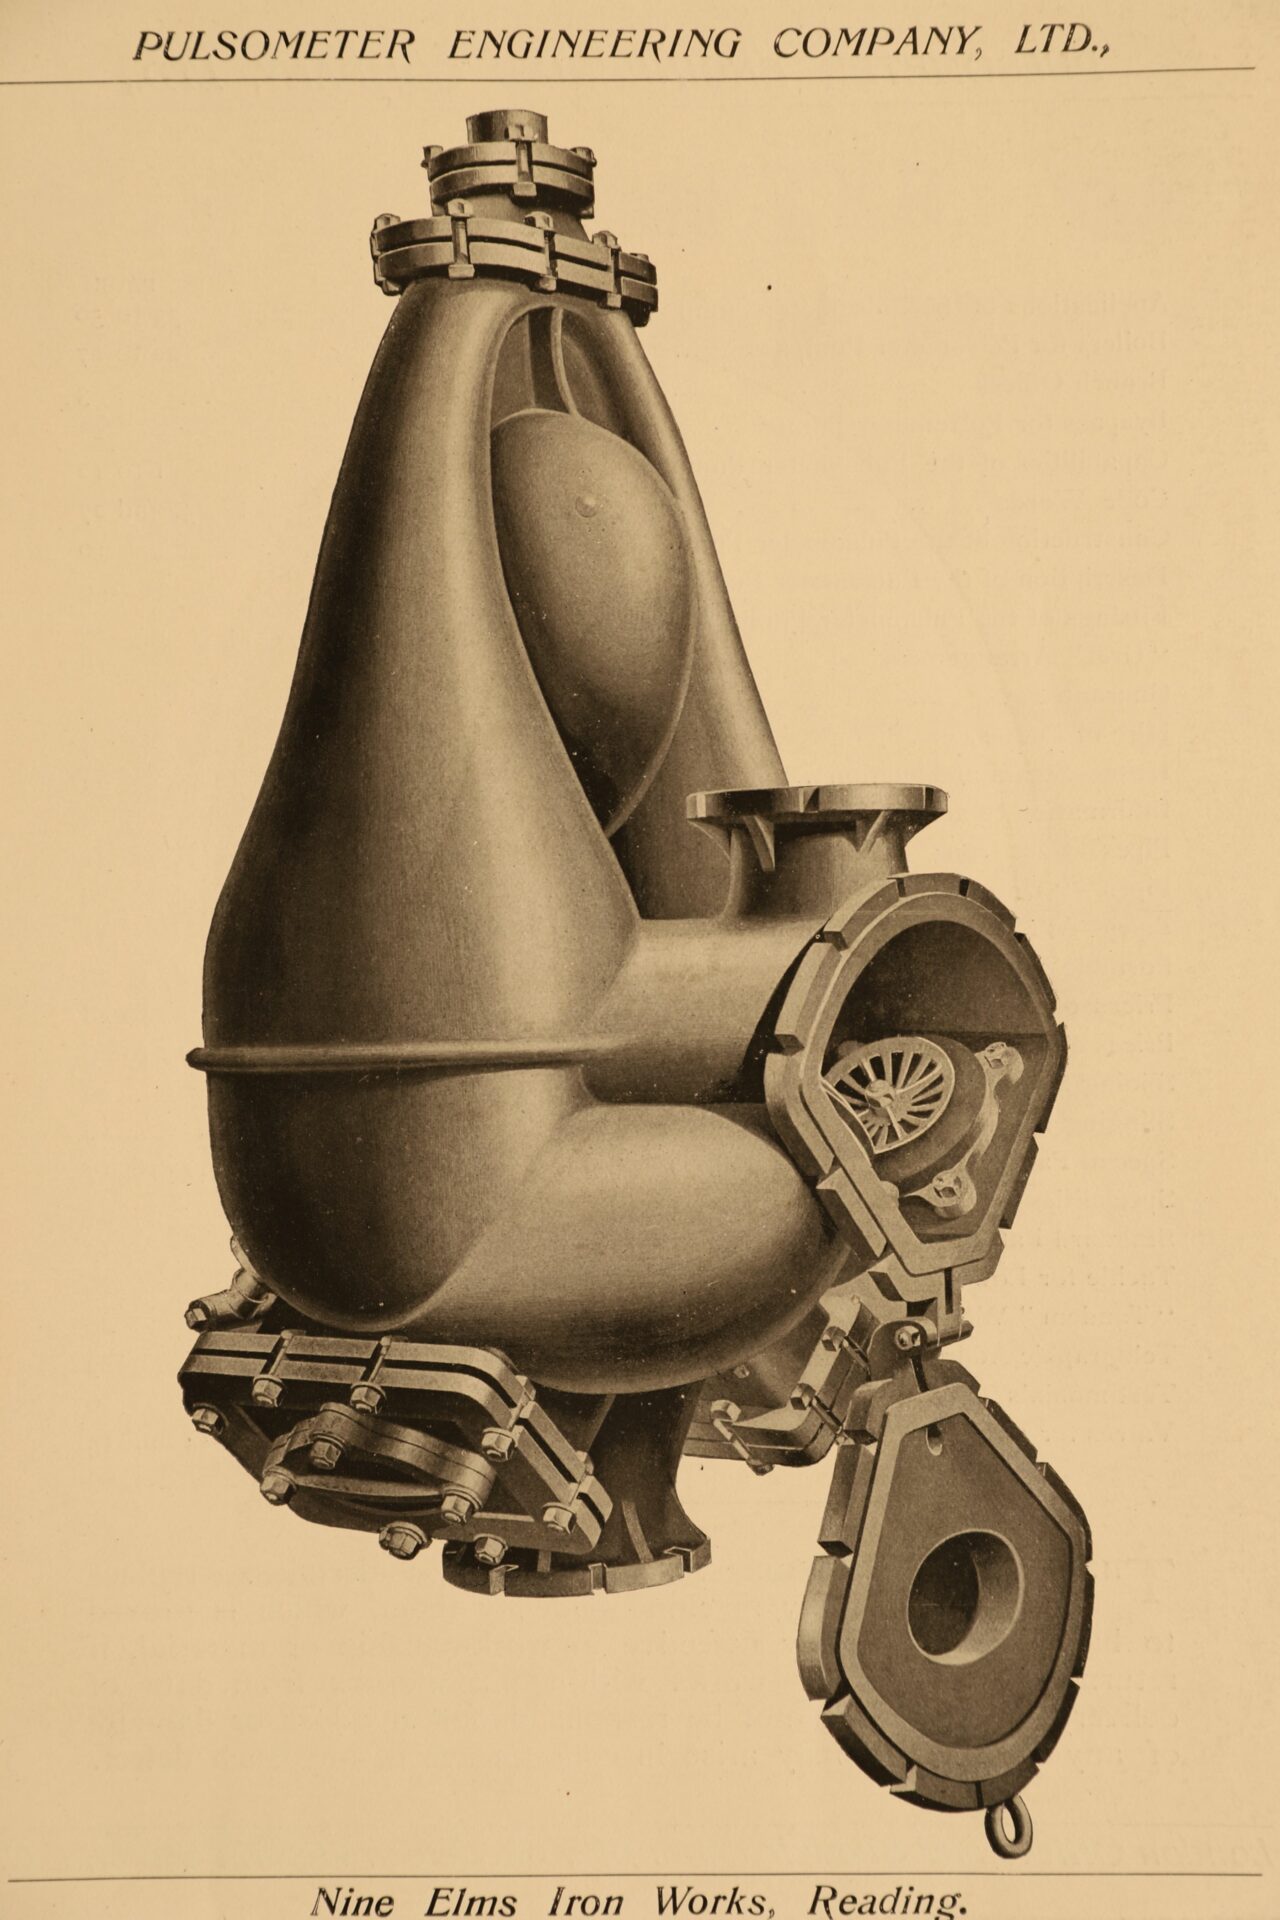 Pulsometer Steam Pumps Catalogue 1908